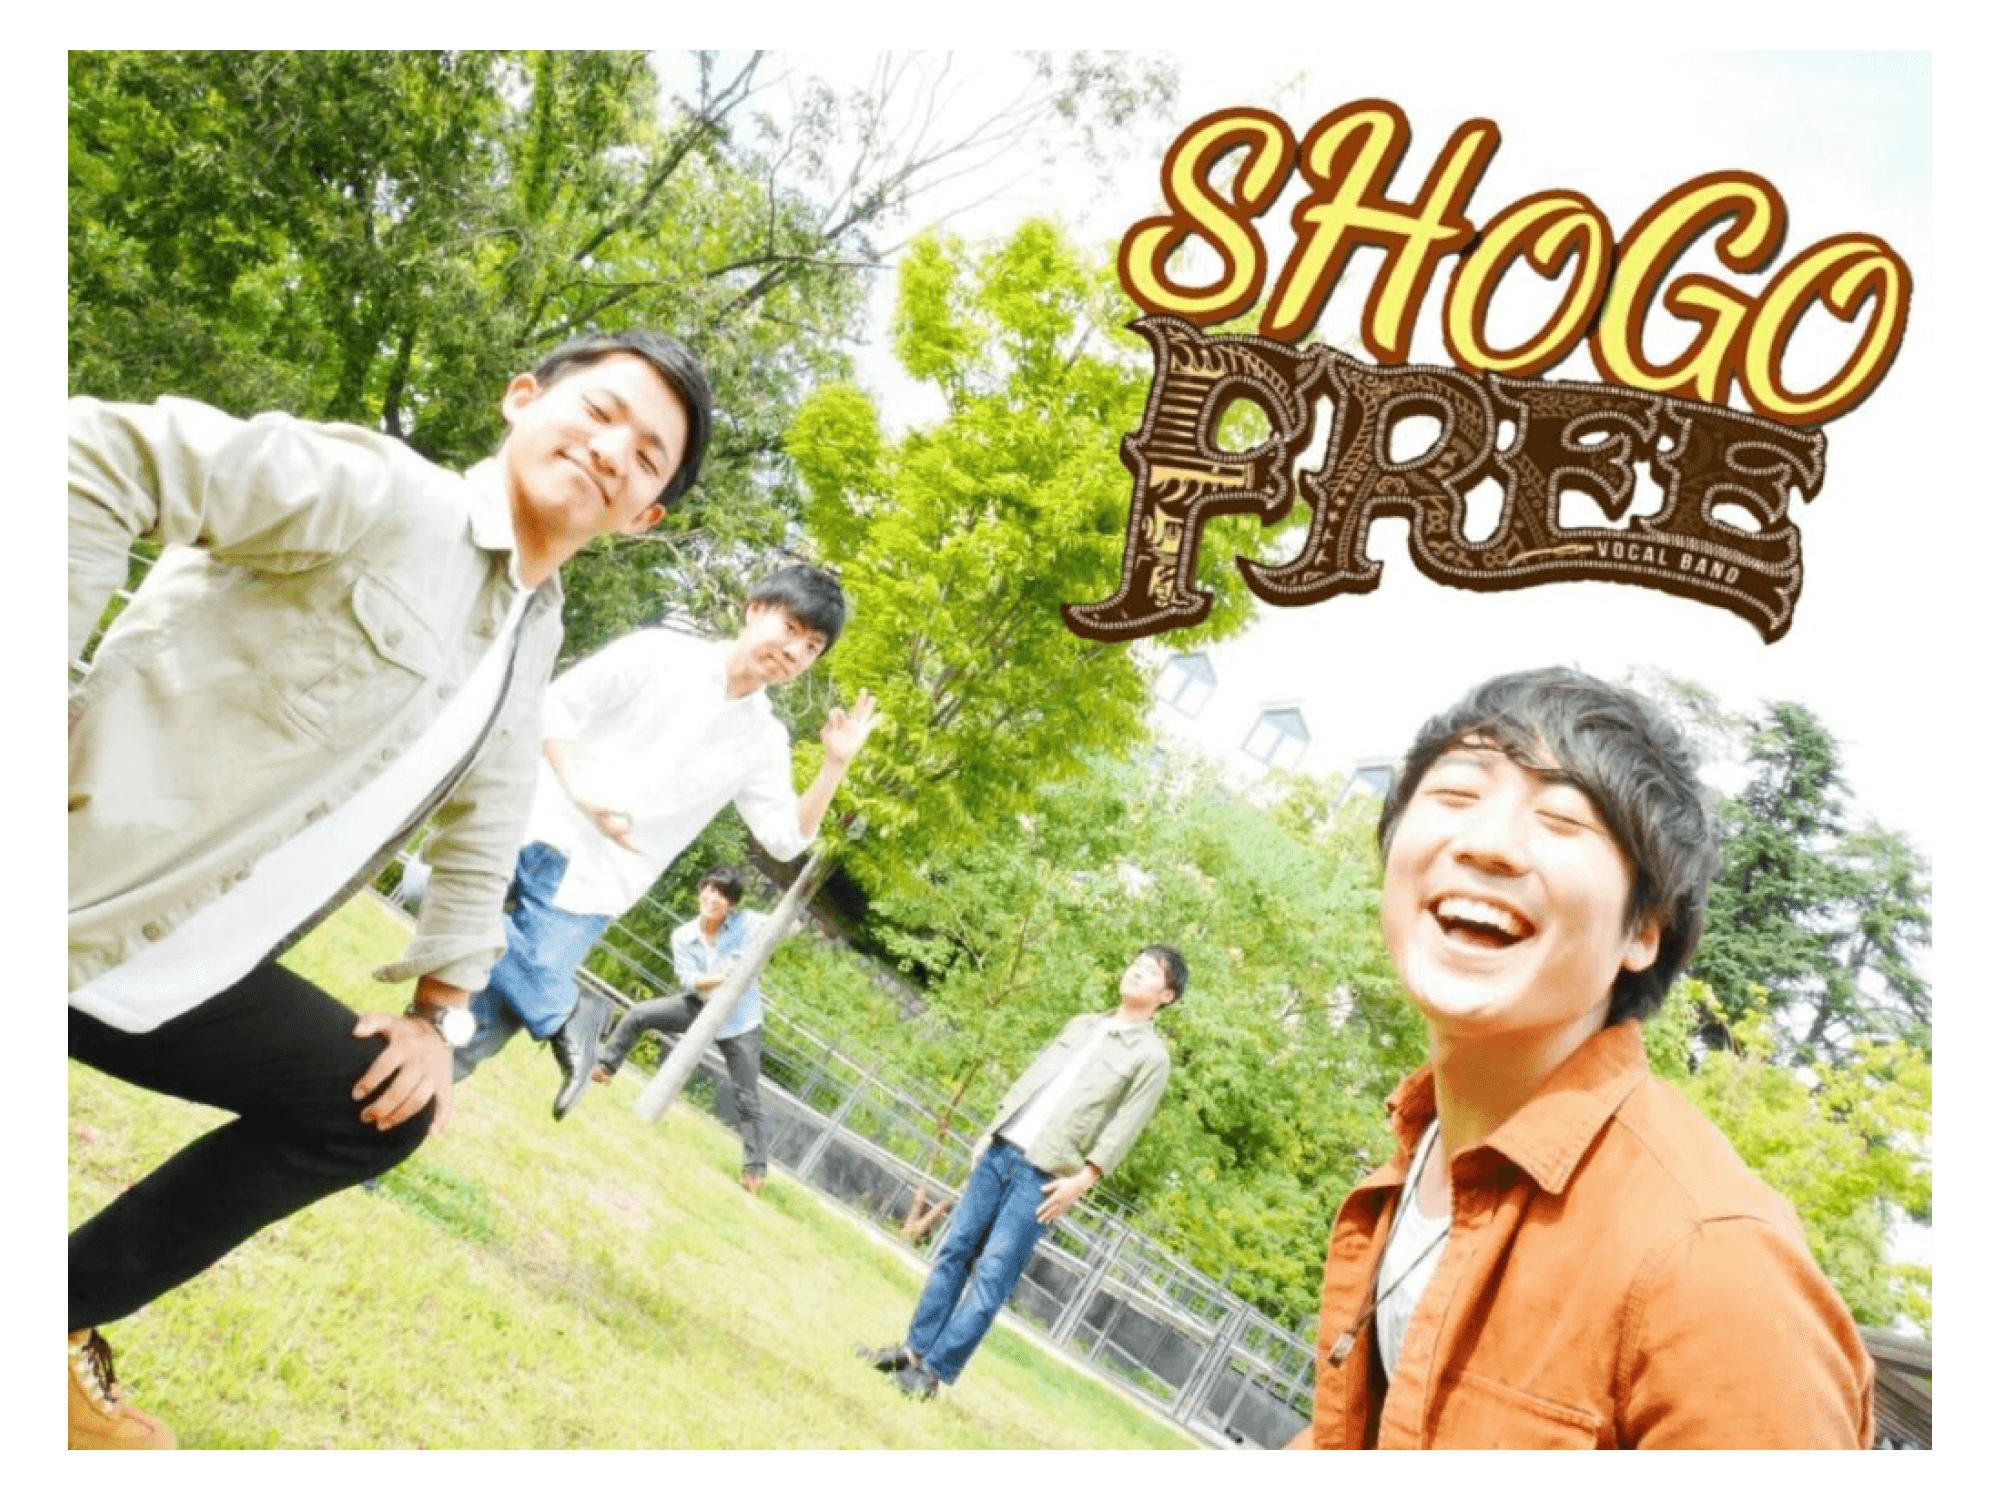 Shogo Free